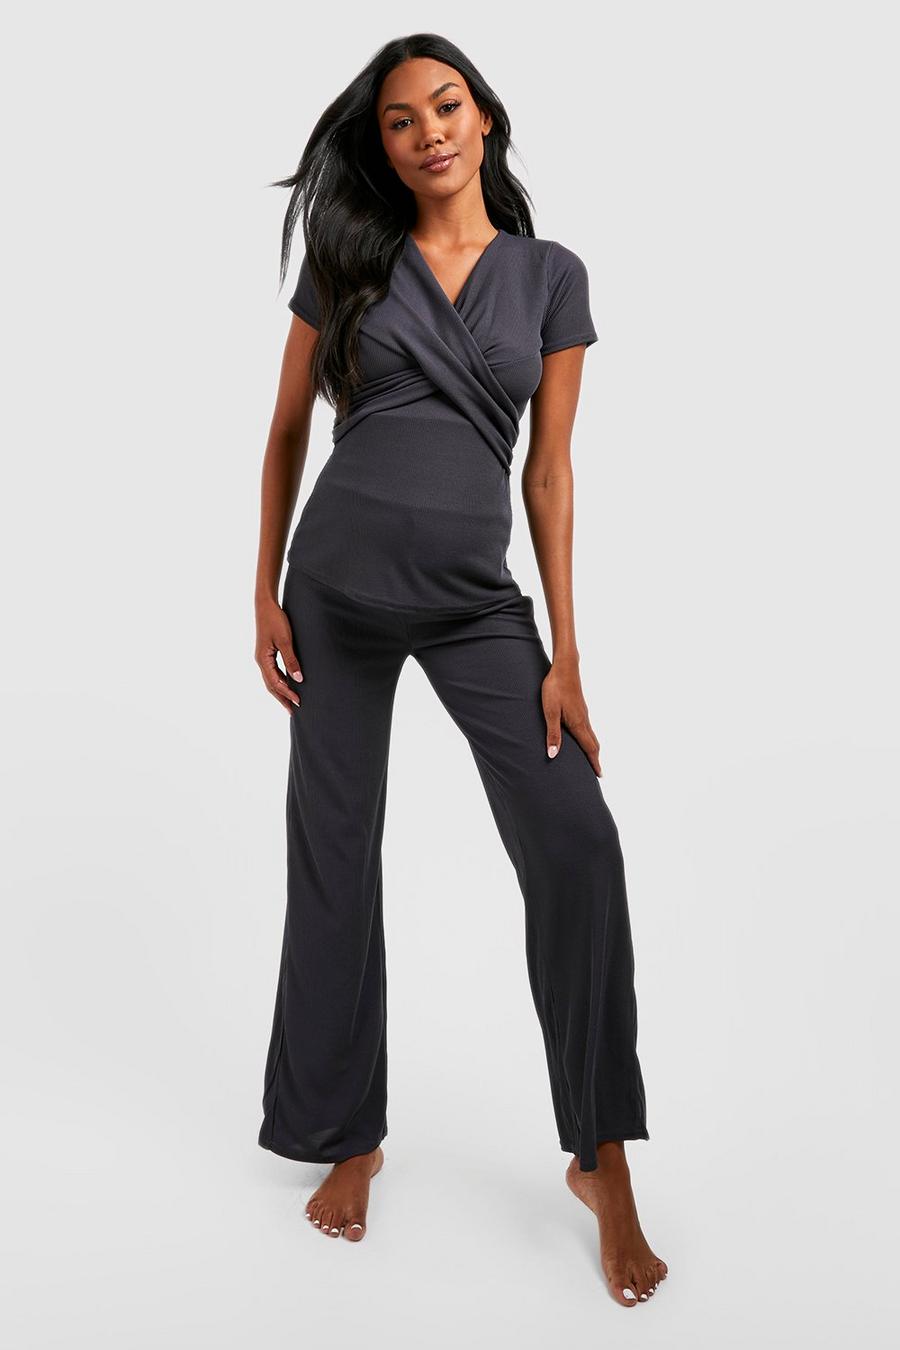 Charcoal grey Maternity Rib Wrap Nursing Pajama Pants Set